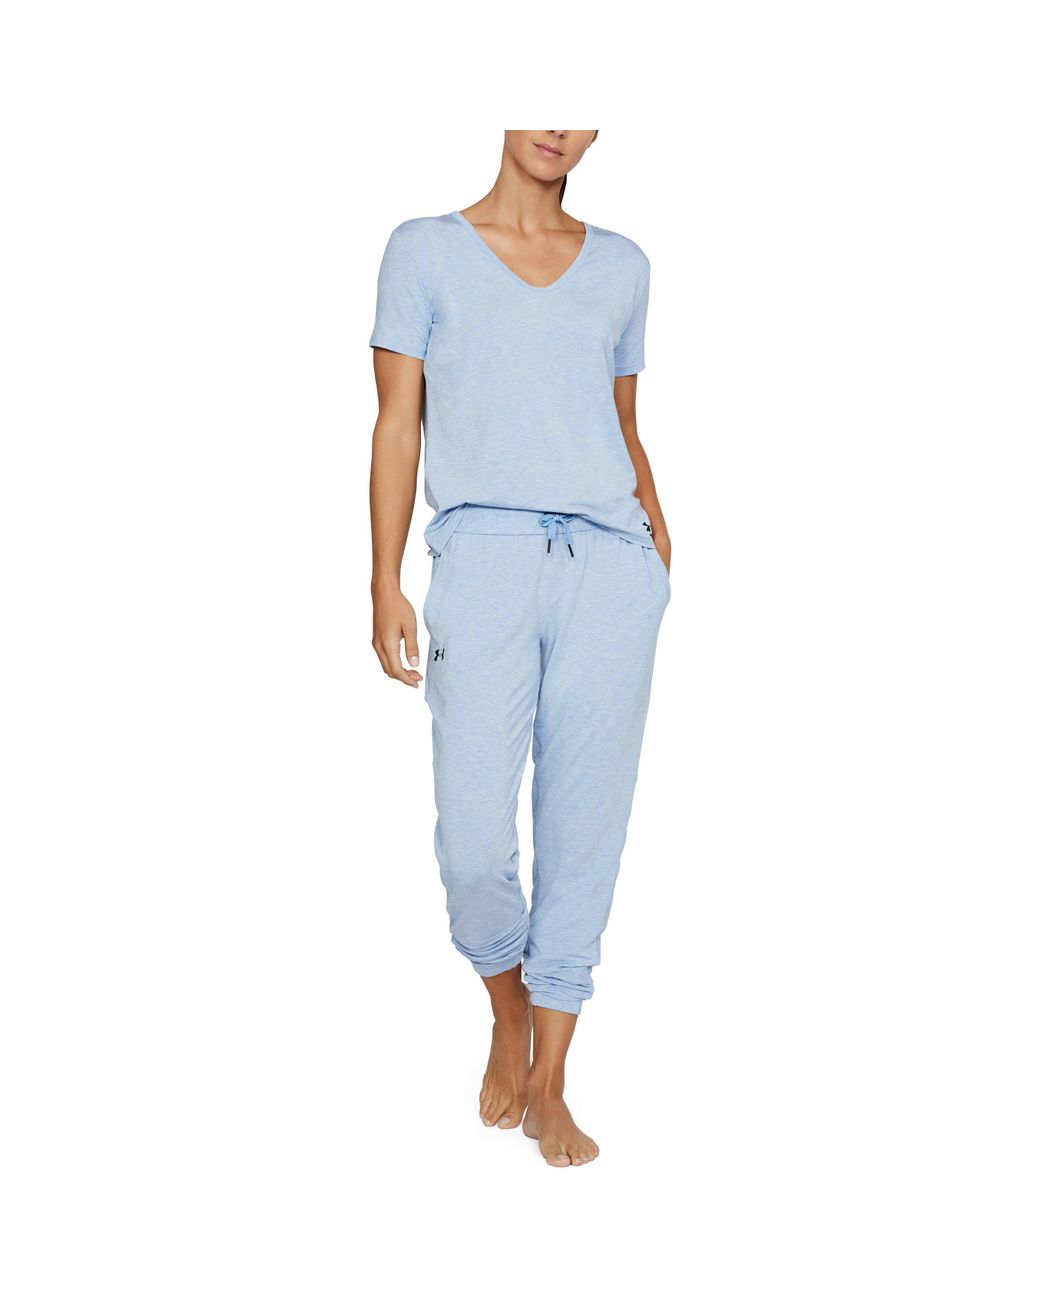 Under Armour Women's Athlete Recovery Sleepwear Pants in Blue | Lyst